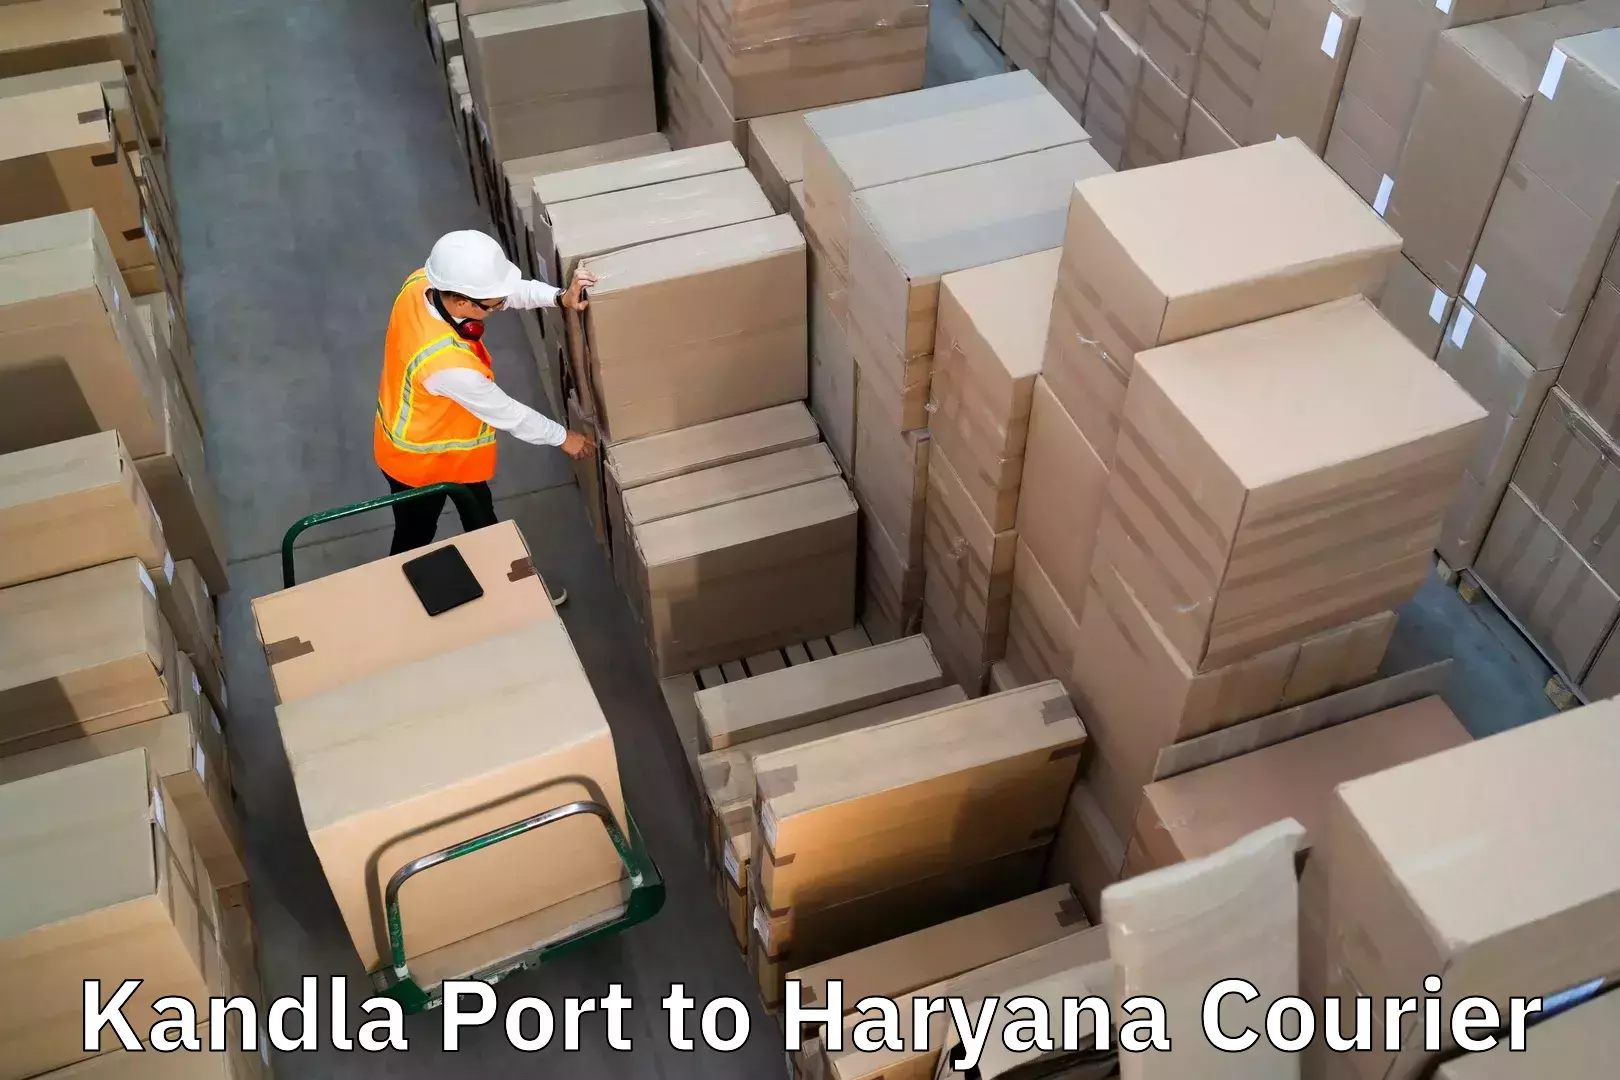 Luggage transfer service in Kandla Port to Chandi Rohtak